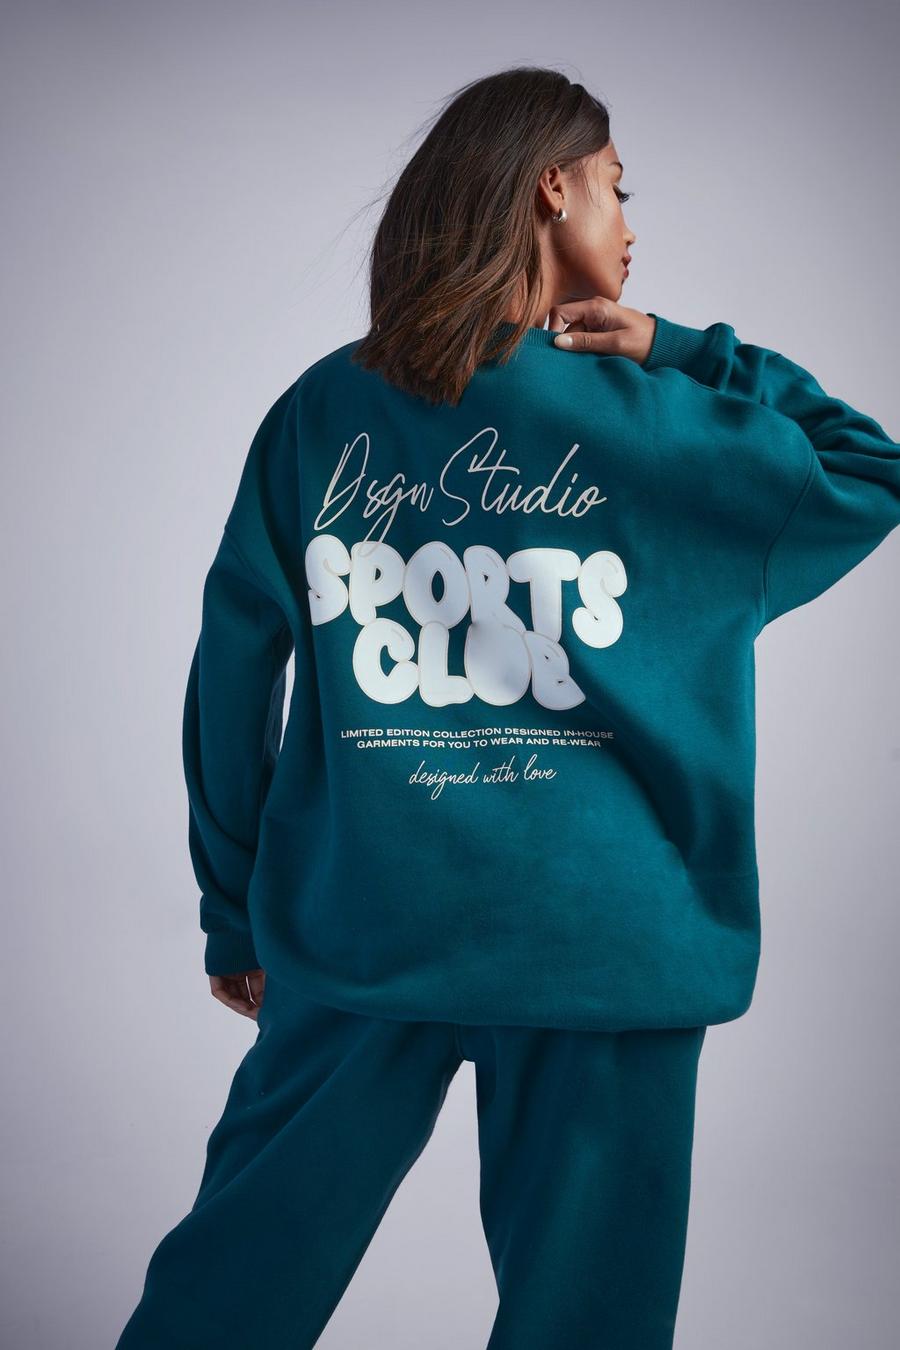 Oversize Sweatshirt mit Dsgn Studio Sports Club Slogan, Teal image number 1